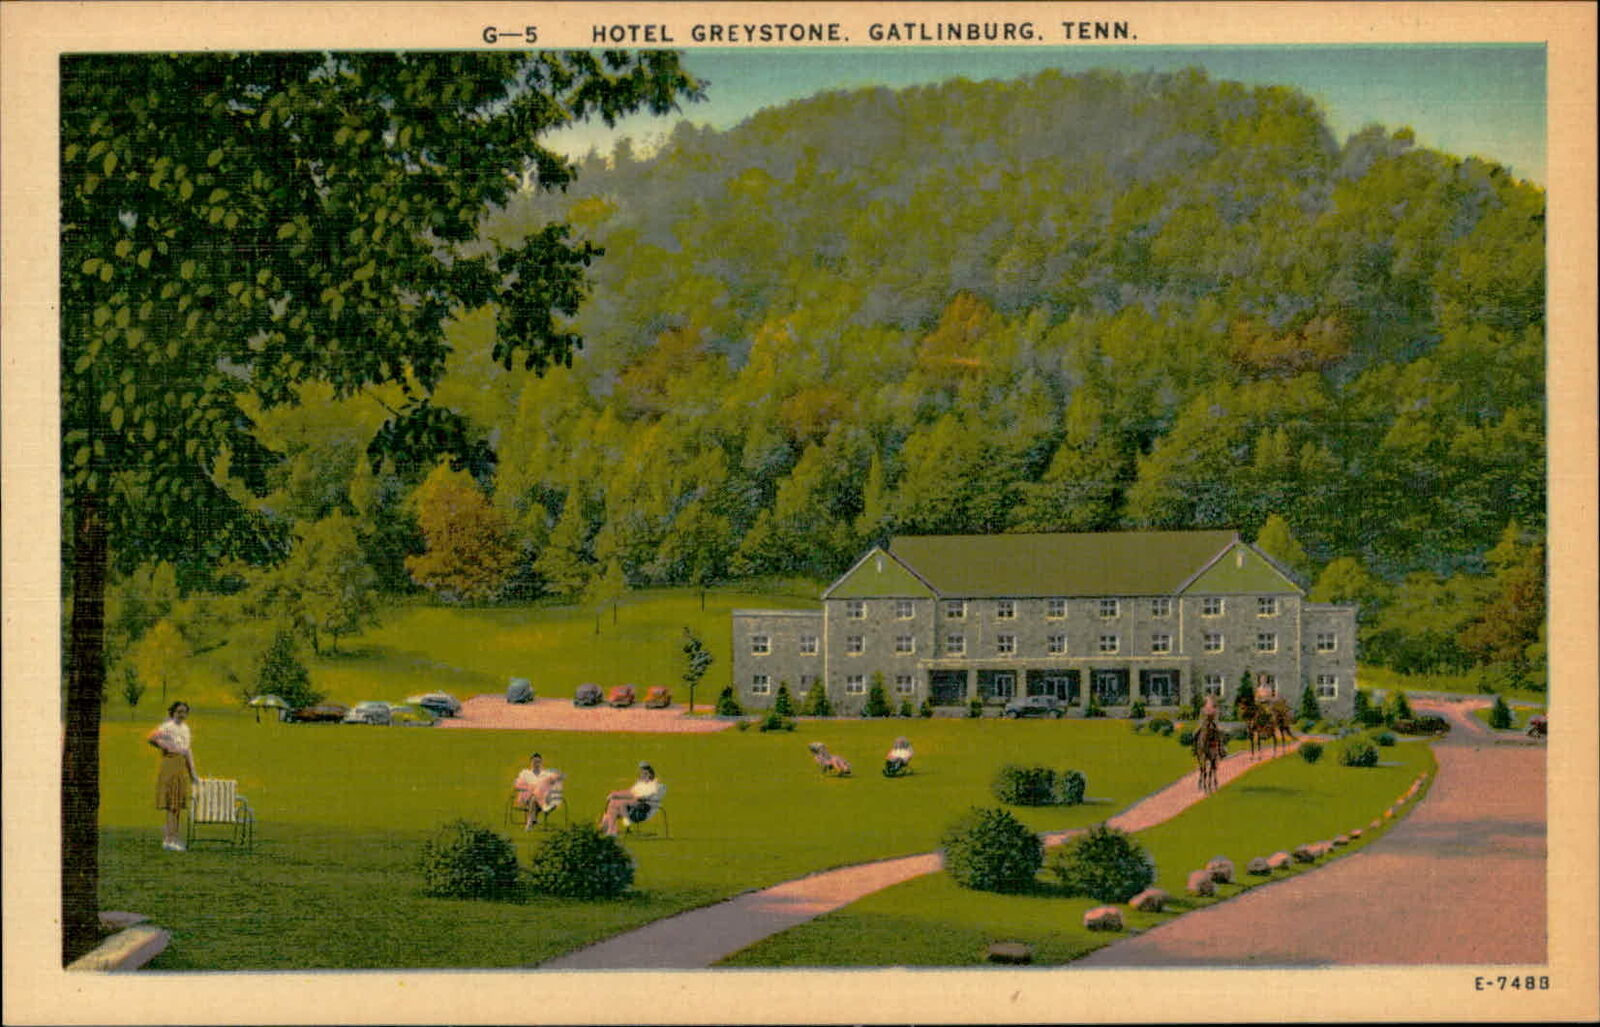 Postcard: G-5 HOTEL GREYSTONE. GATLINBURG. TENN. E-7488